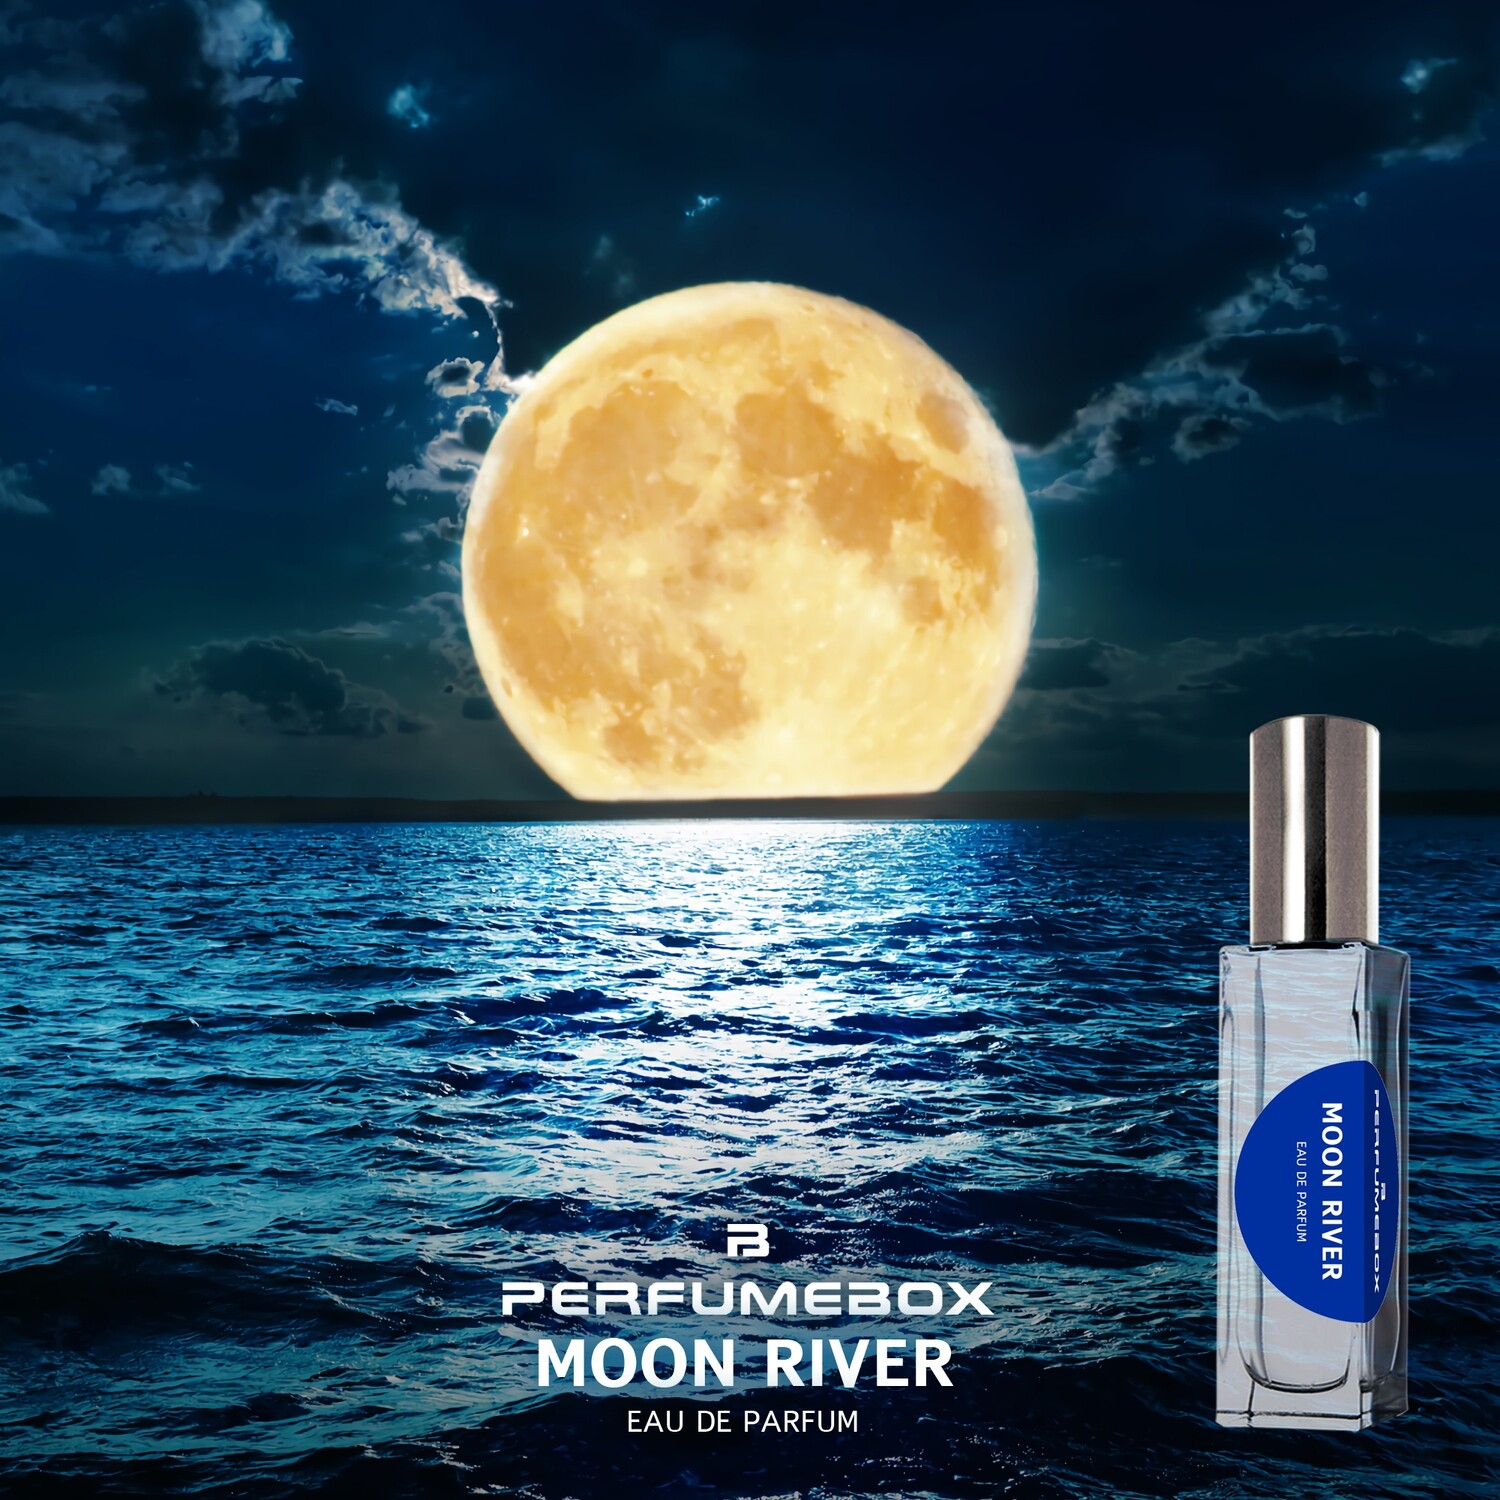 Perfumebox Moon River eau de parfum